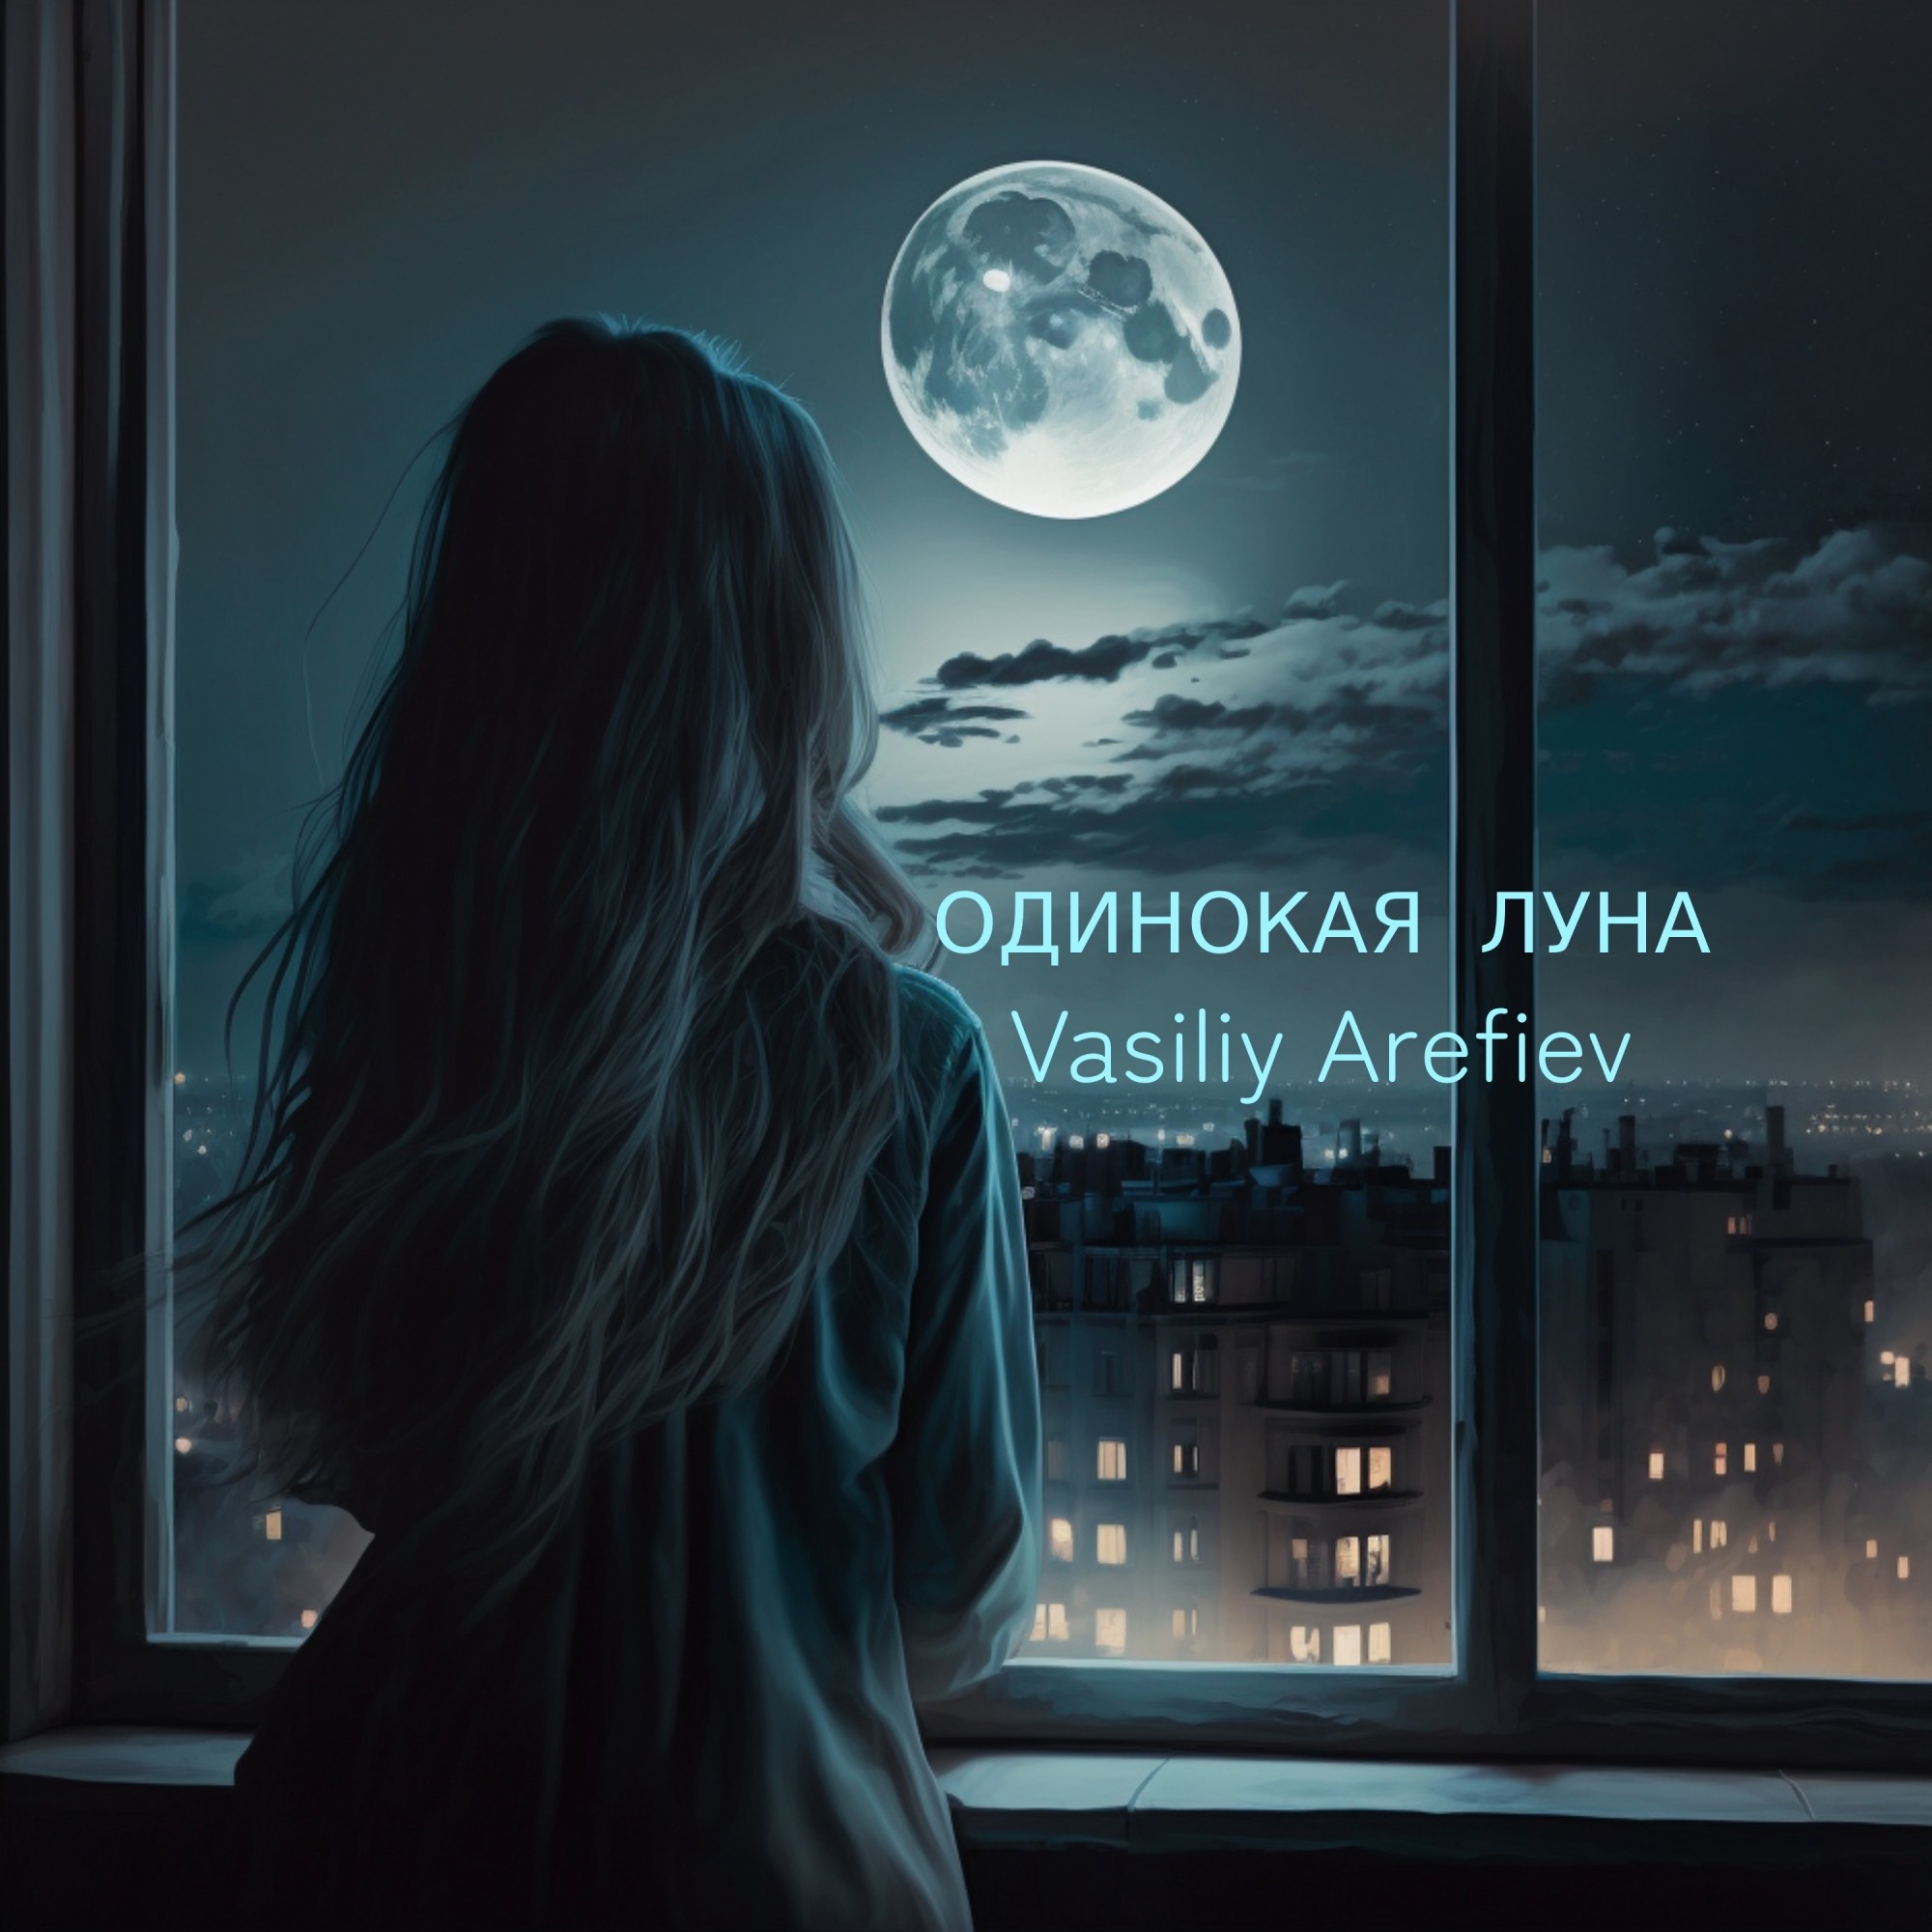 Janaga песни одинокая луна. Одиночка Луна. Луна одиночество. Лунное одиночество. Одинокая Луна песня.